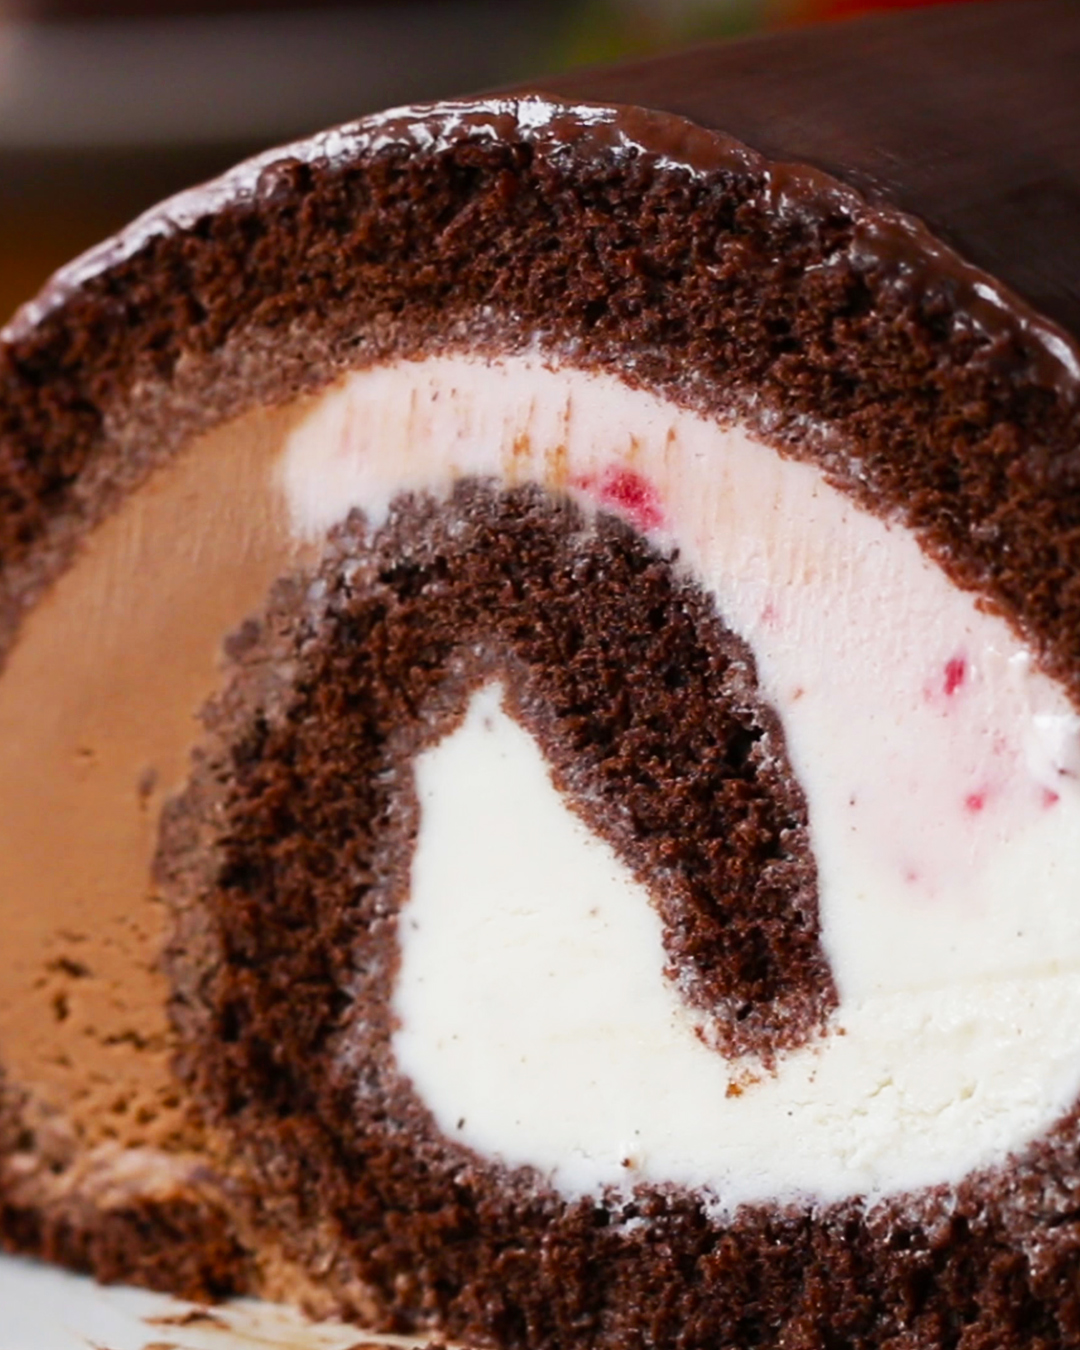 Ice Cream Roll Cake: A Homemade Ice Cream Cake Everyone Will Love